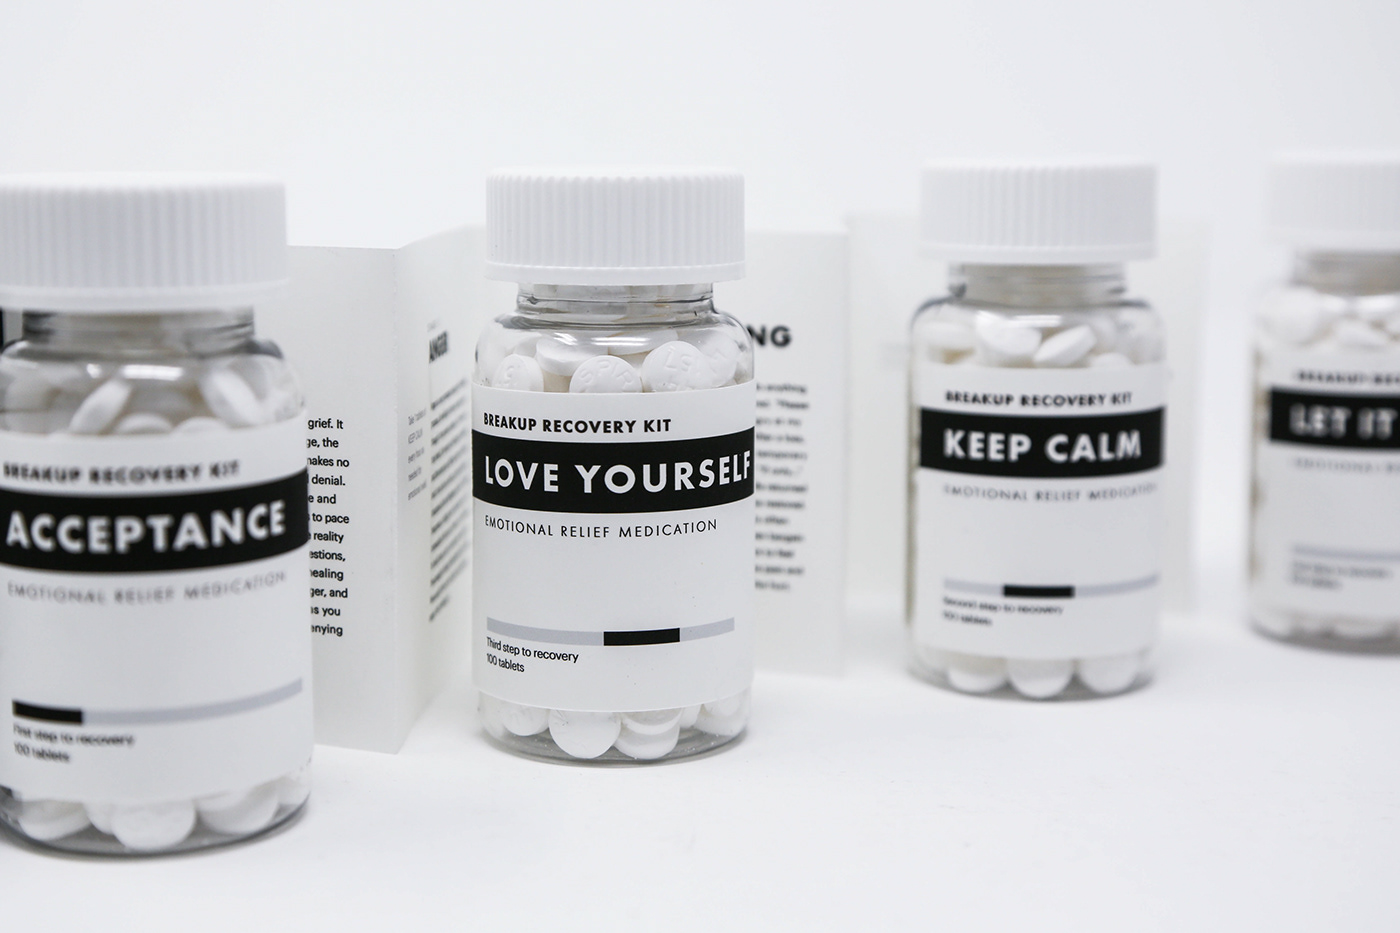 branding  packing Break up Recovery break up kit pill medication adobeawards